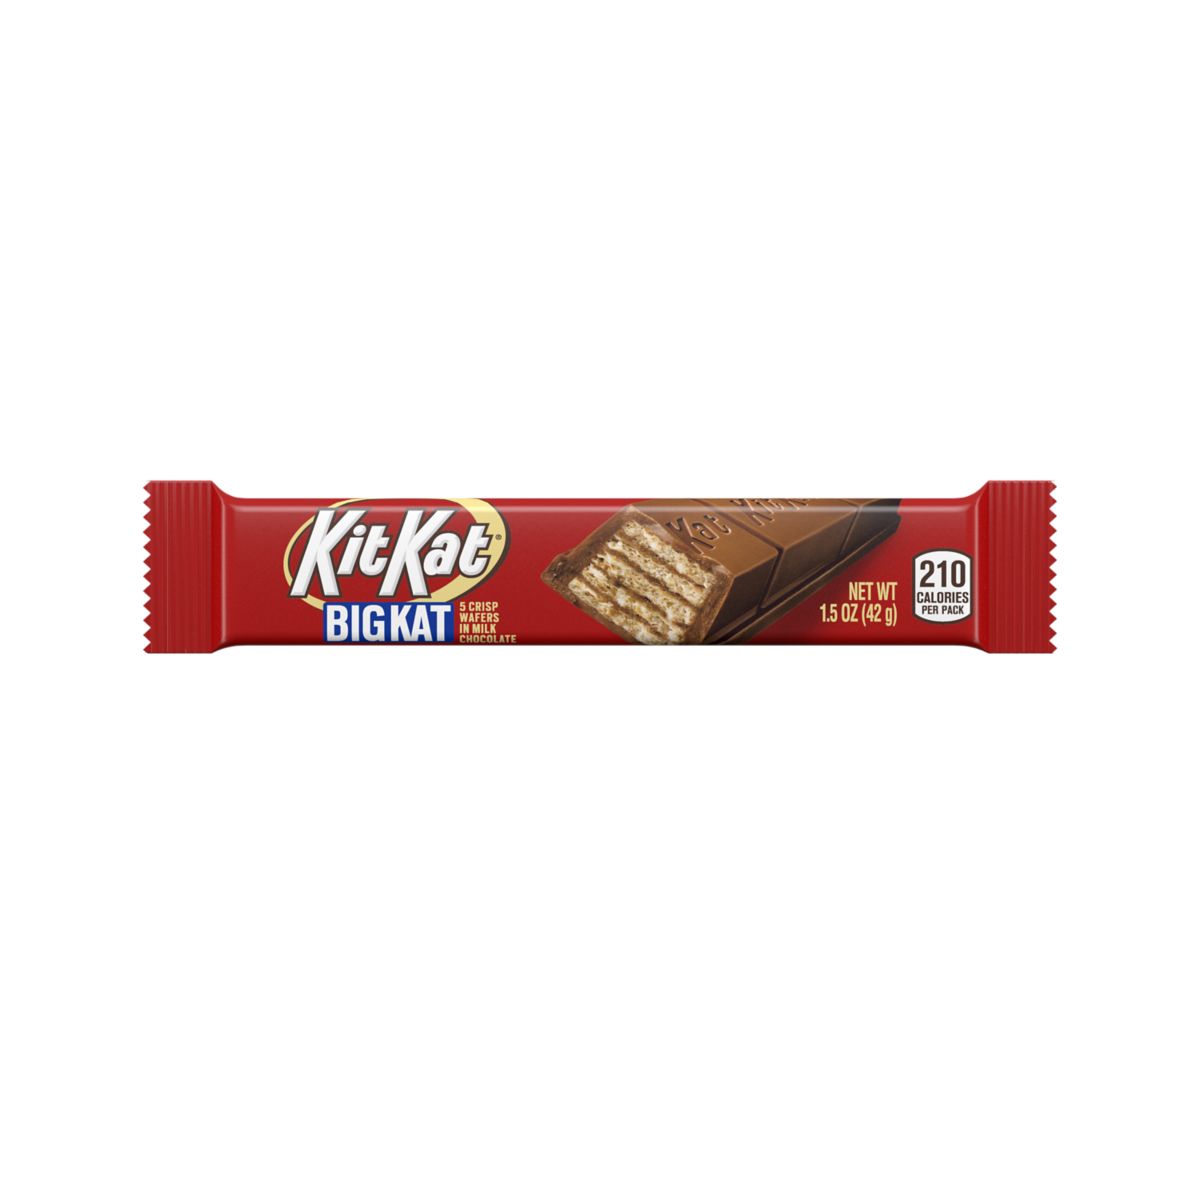 Kit Kat Crisp Wafers in Milk Chocolate, Big Kat - 24 pack, 1.5 oz packages